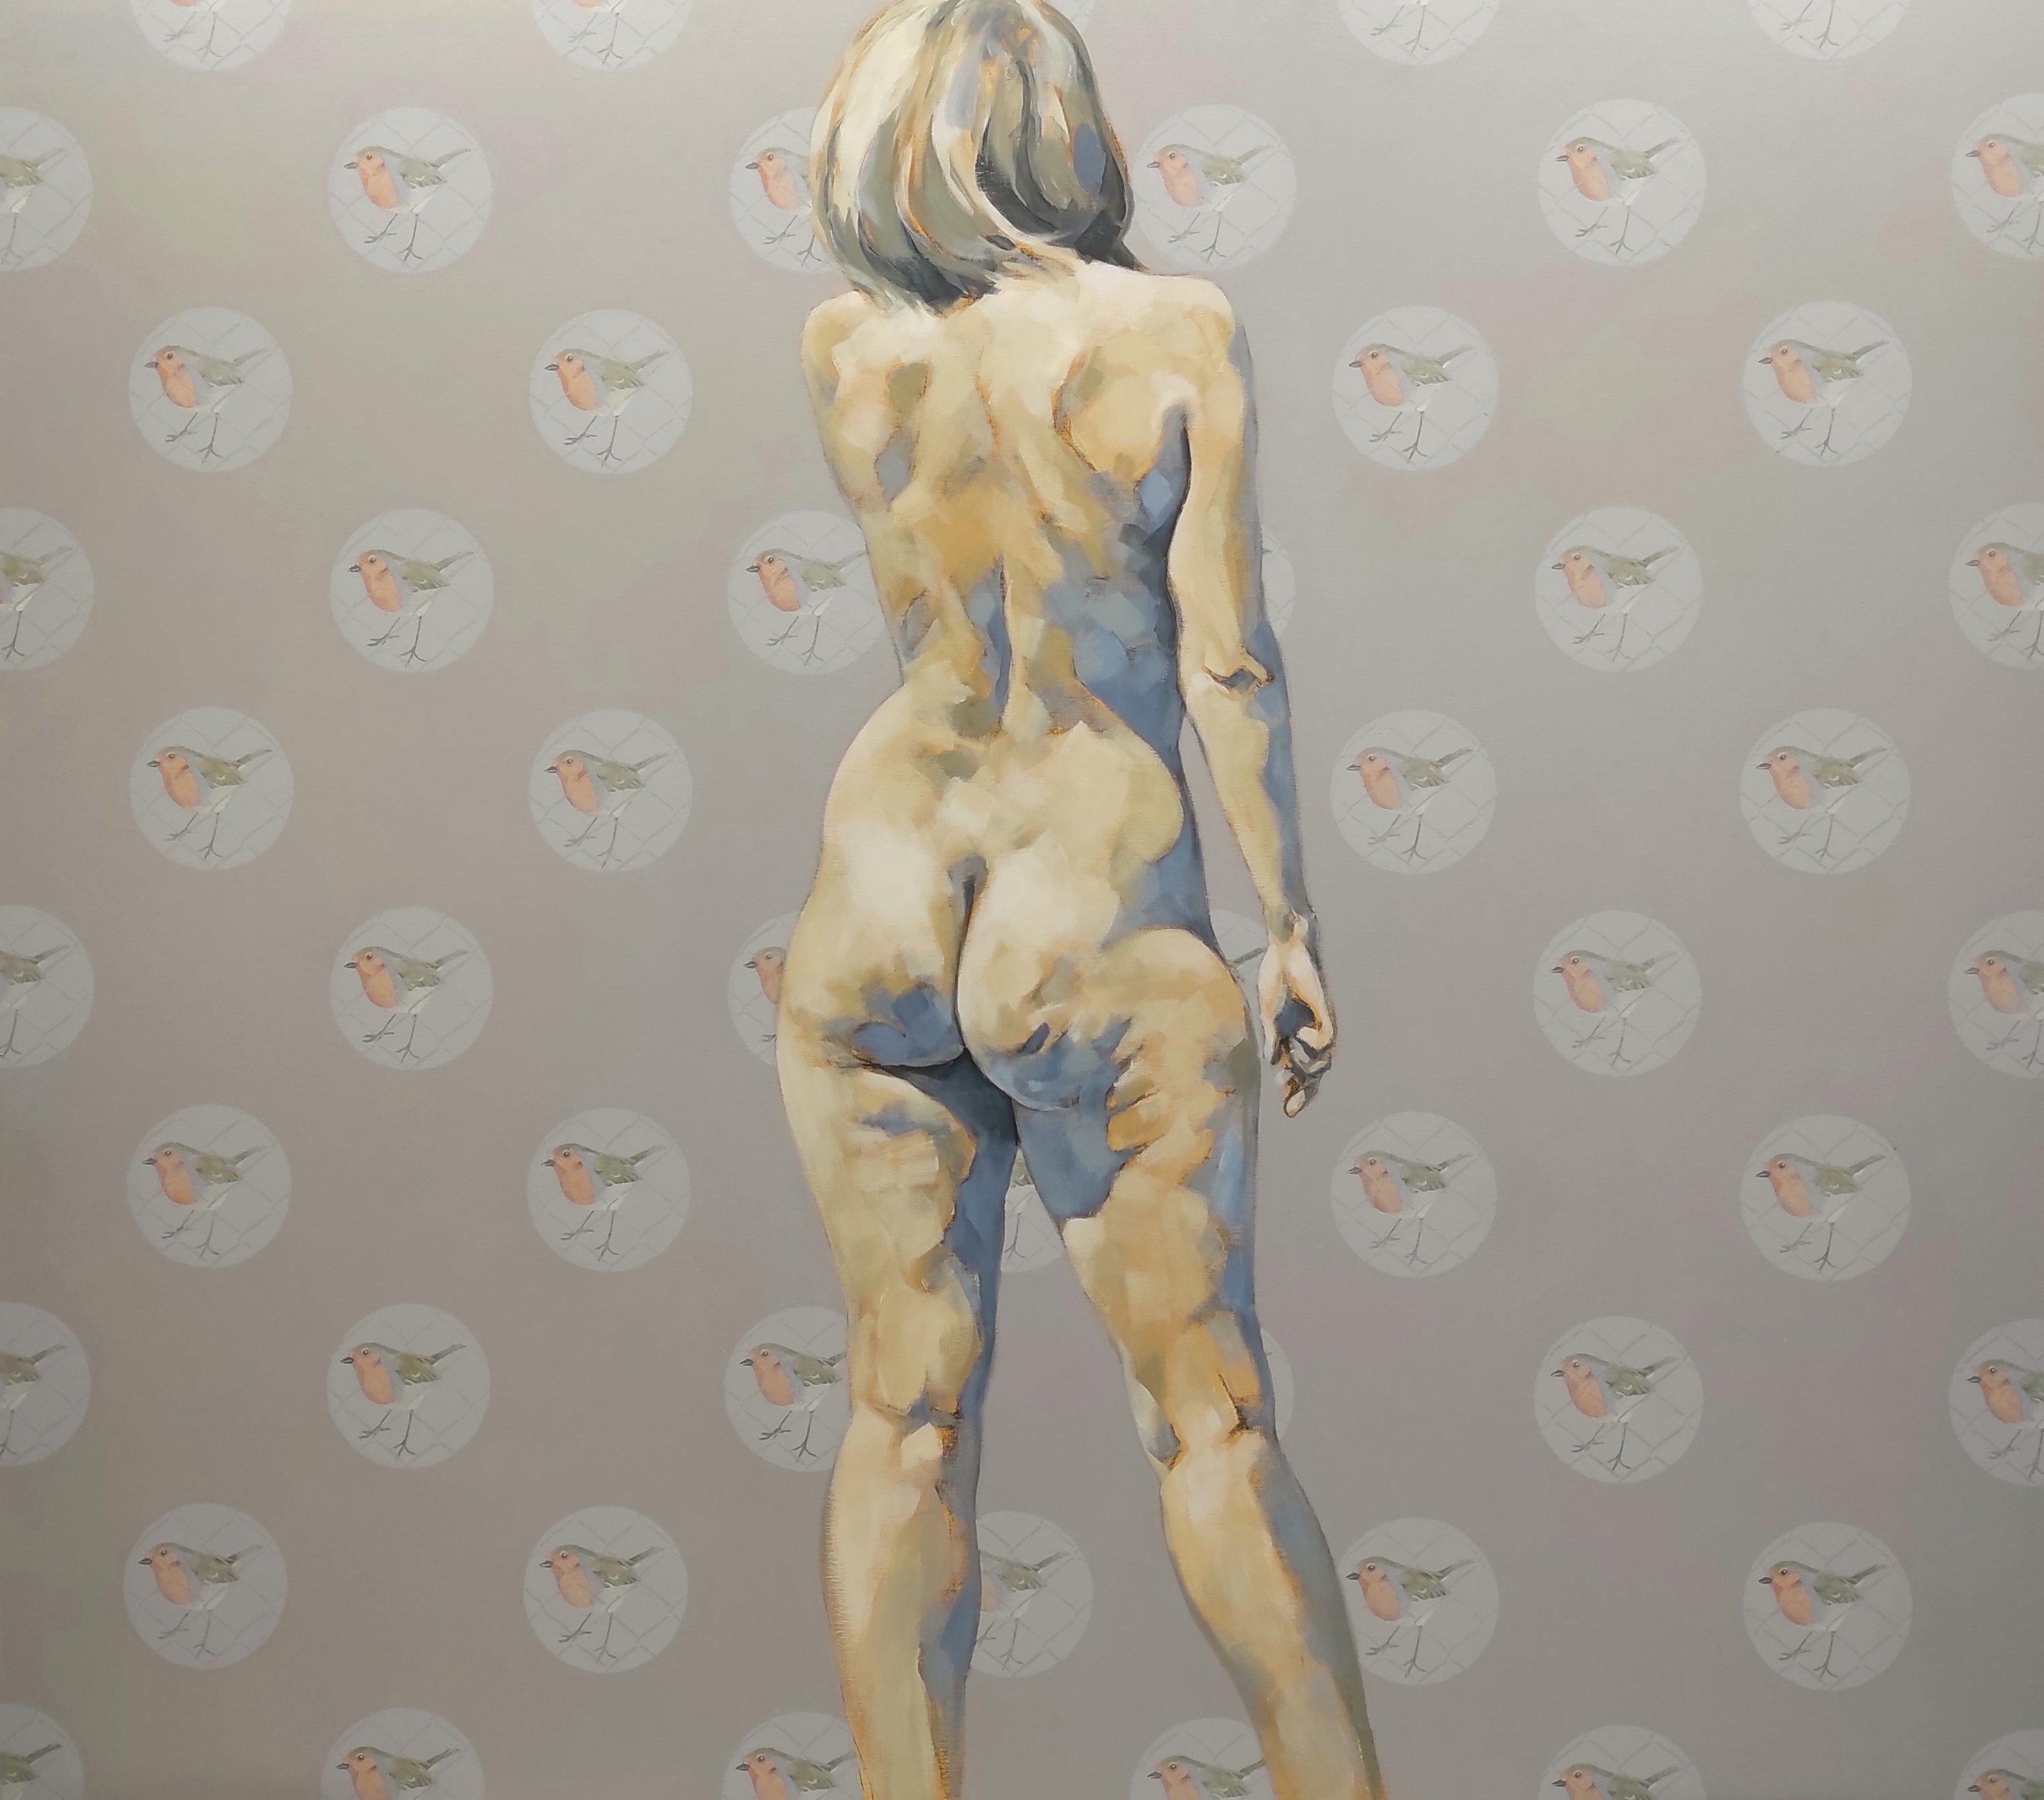 Pep Anton Xaus Nude Painting – Pecho Rojo - 21. Jahrhundert, Figuratives, Akt, weiblicher Körper, Feminismus, Acryl